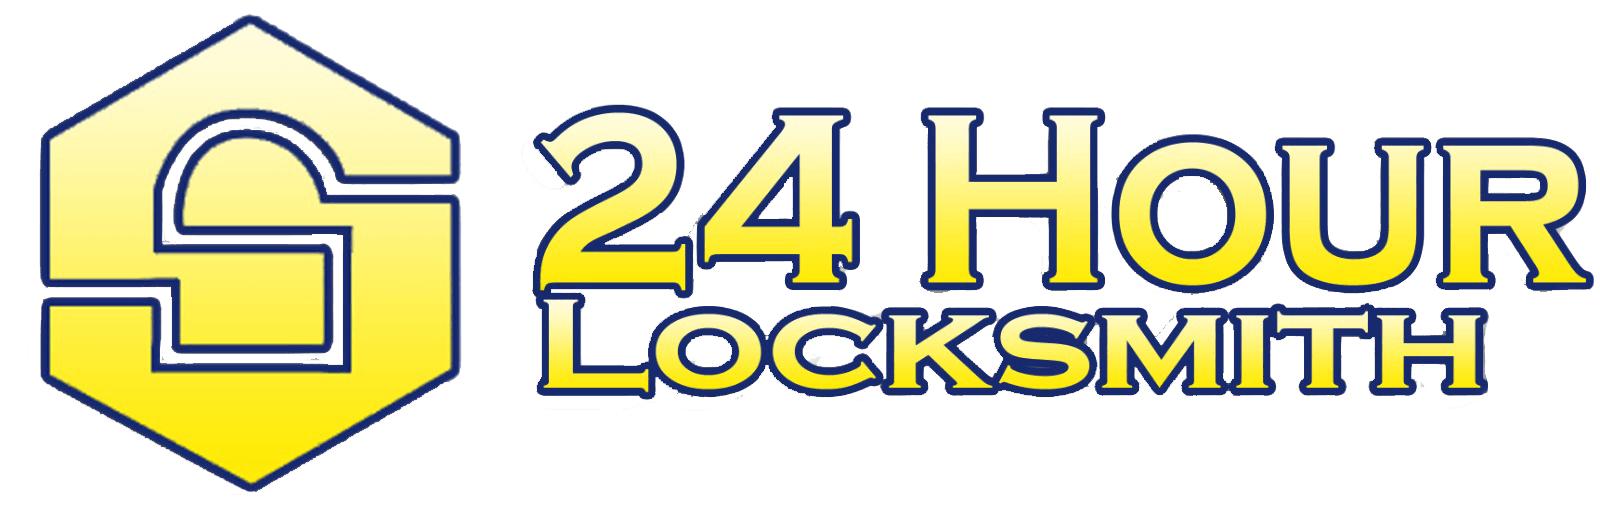 24 Hour Locksmith in Miami, FL